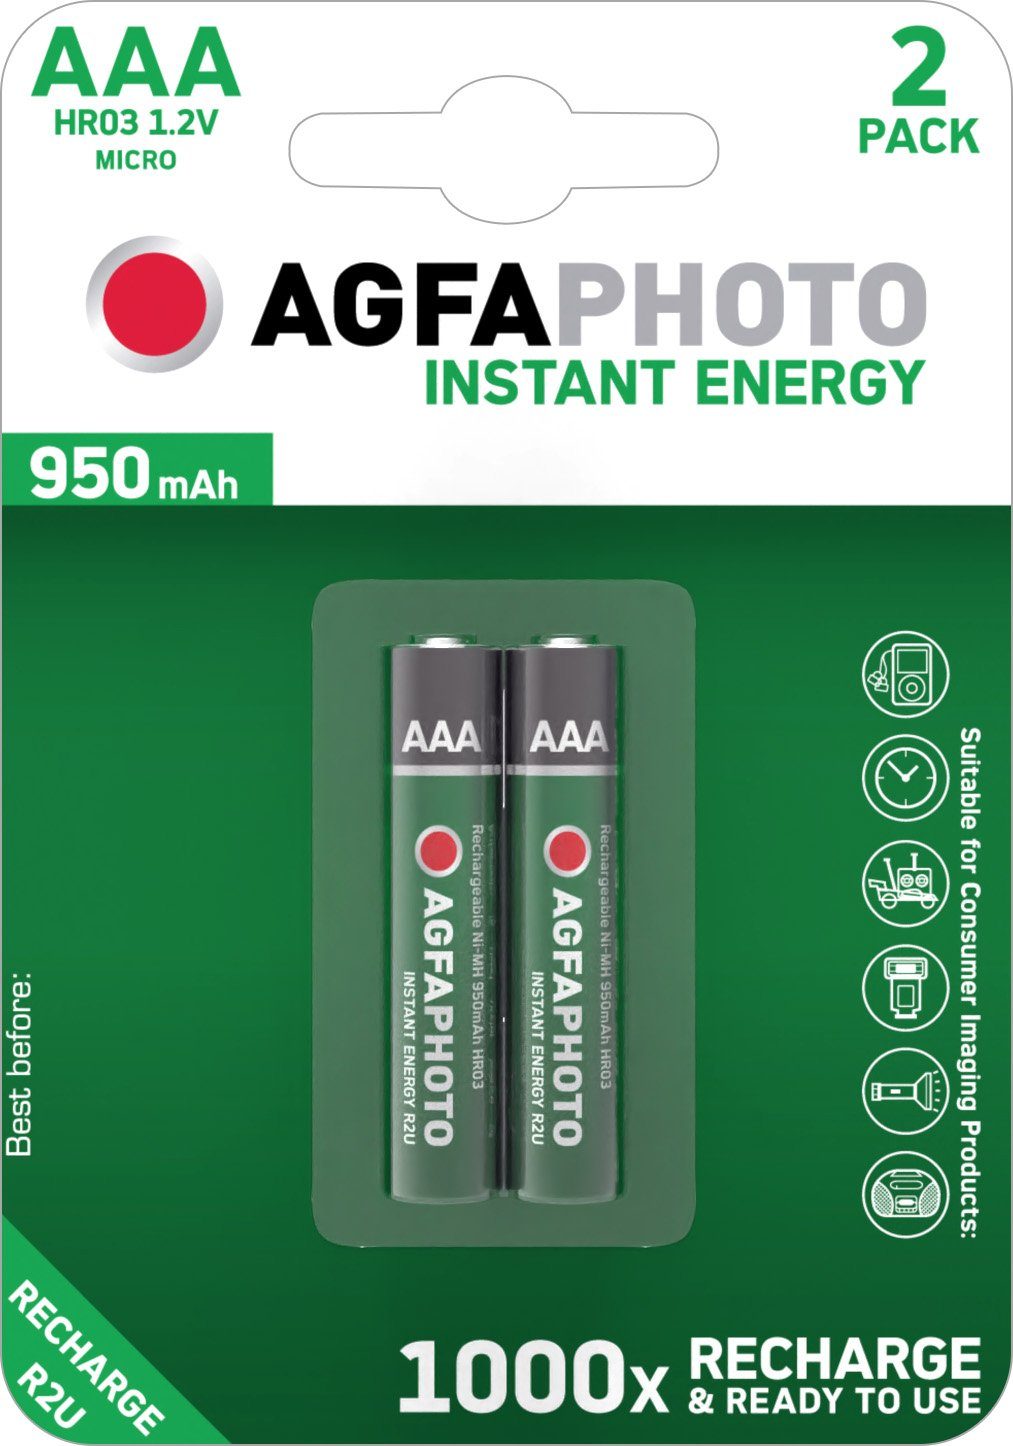 AgfaPhoto Instant Energy Micro/AAA/HR03 Akku Micro (2 St), 1.2V/950mAh | Akkus und PowerBanks